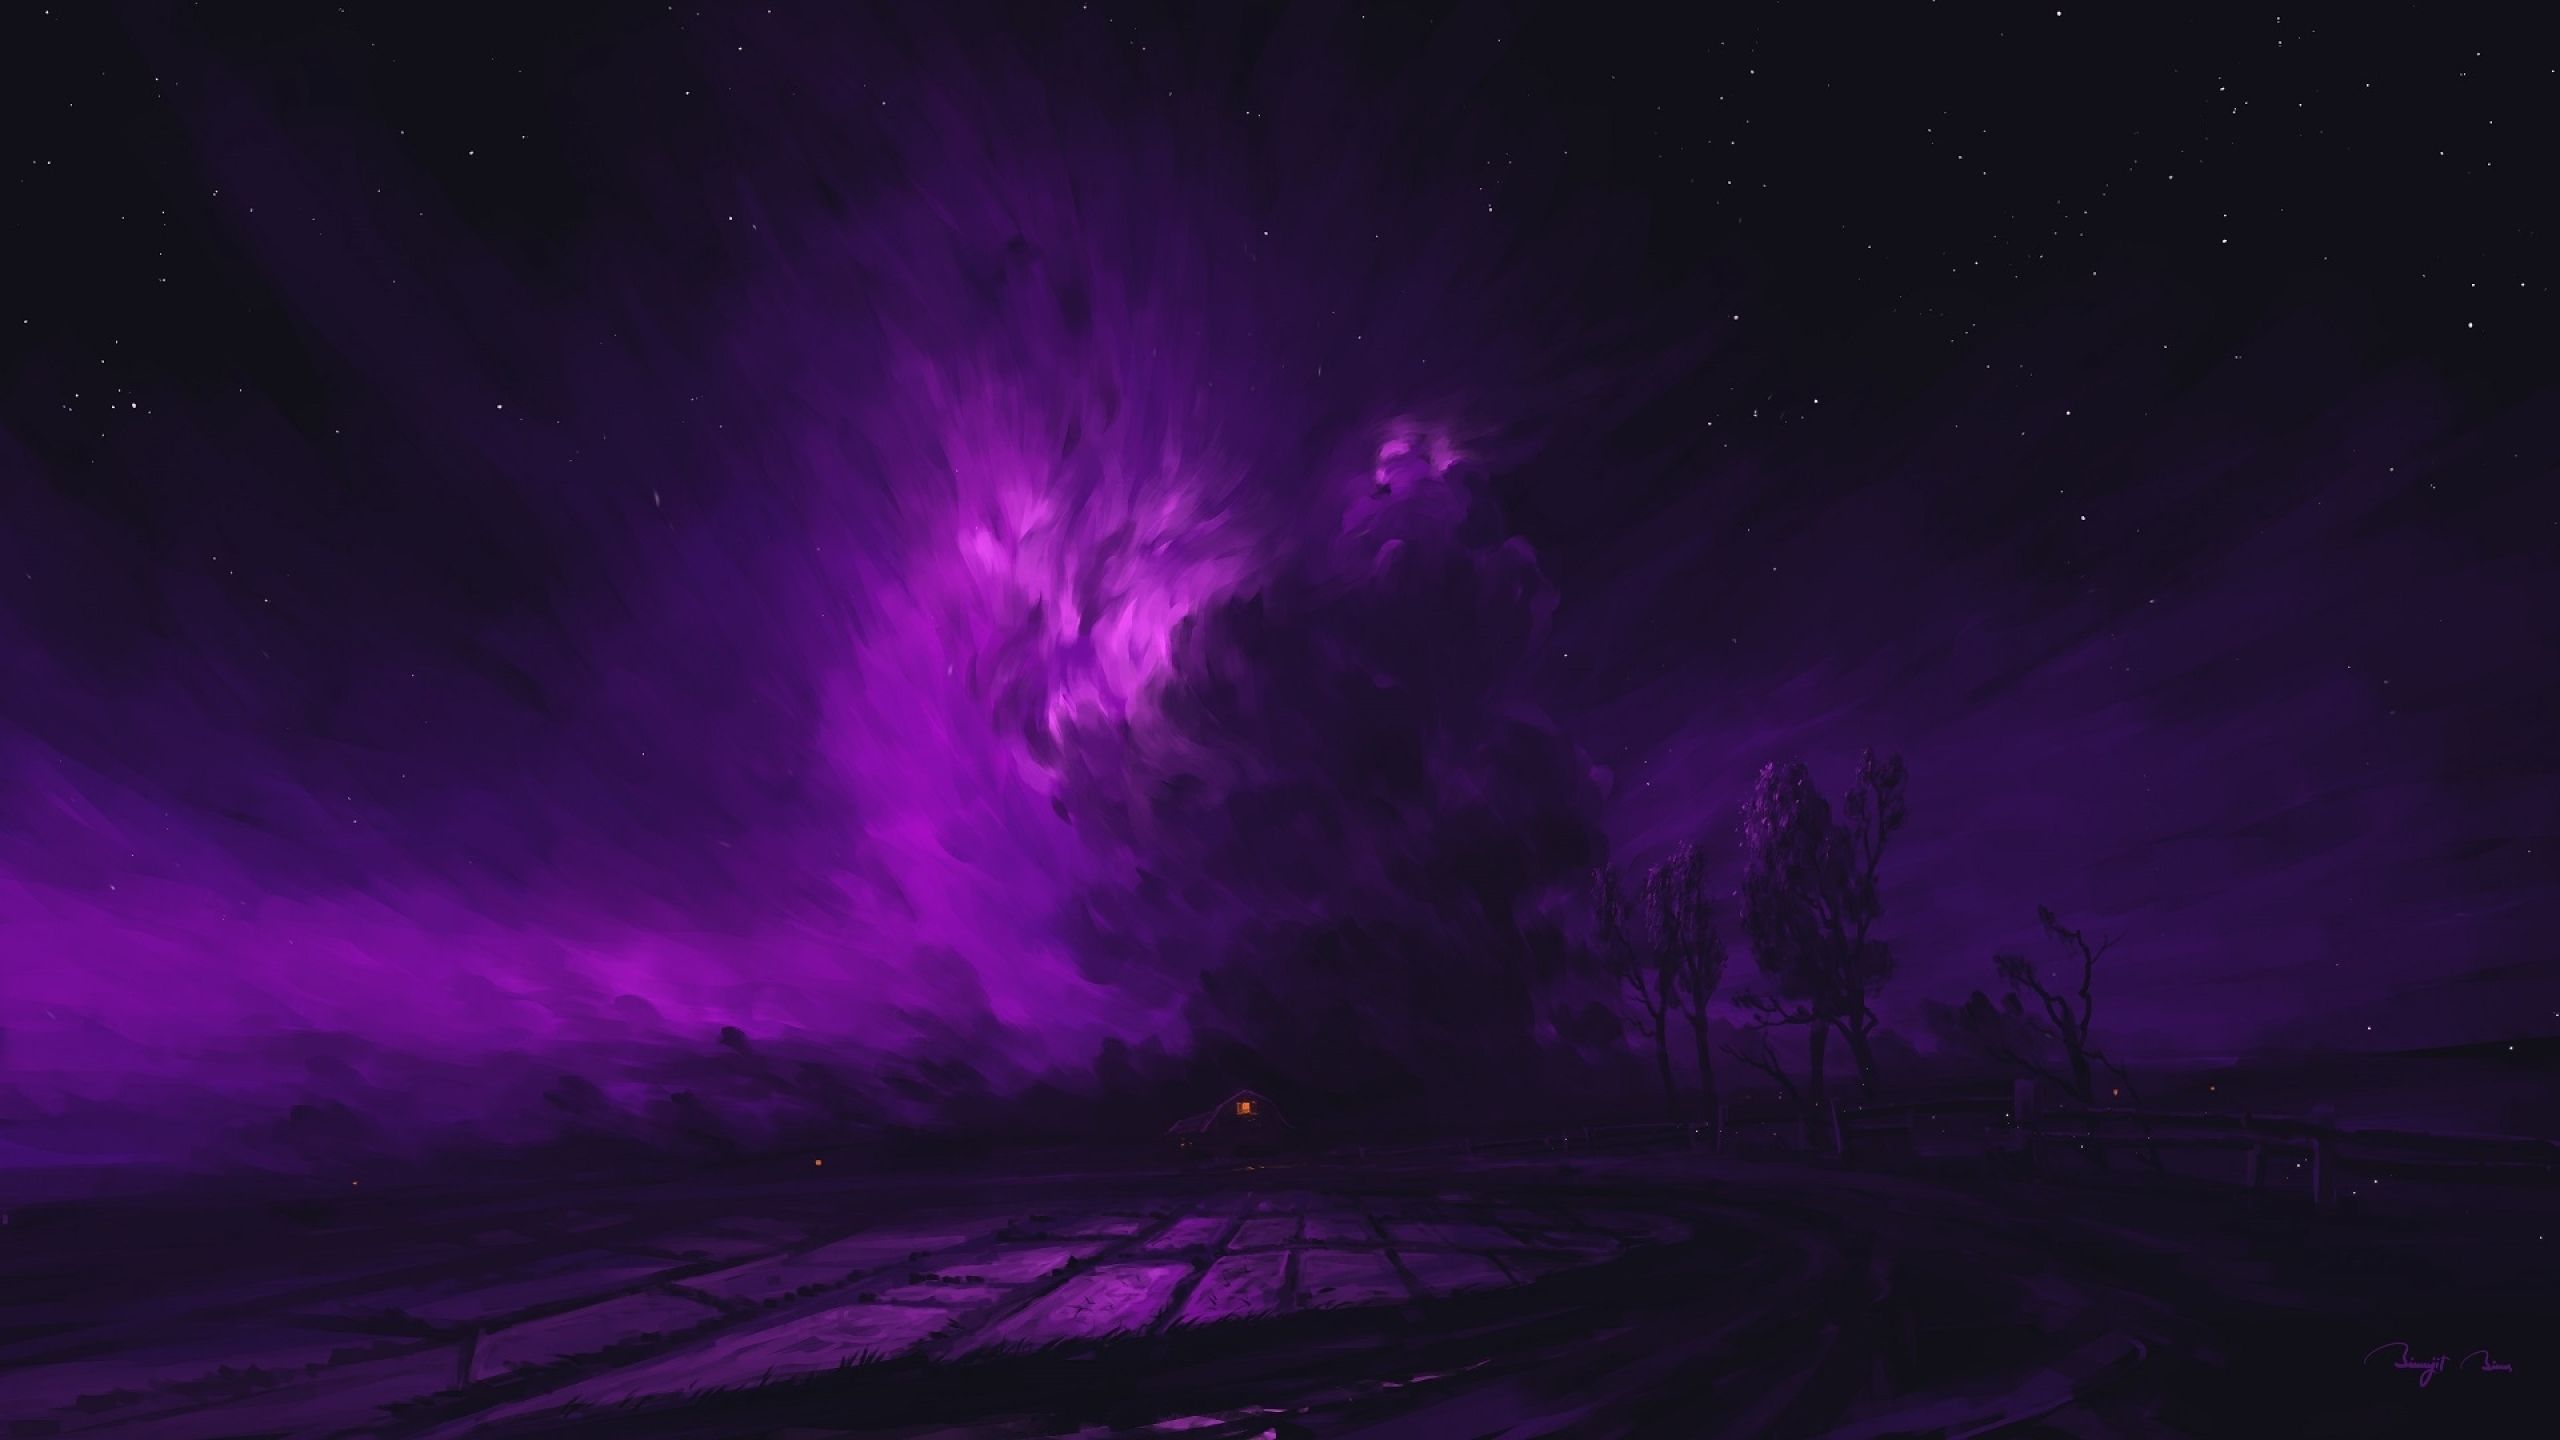 Glowing Purple Cloud Art 1440P Resolution Wallpaper, HD Artist 4K Wallpaper, Image, Photo and Background